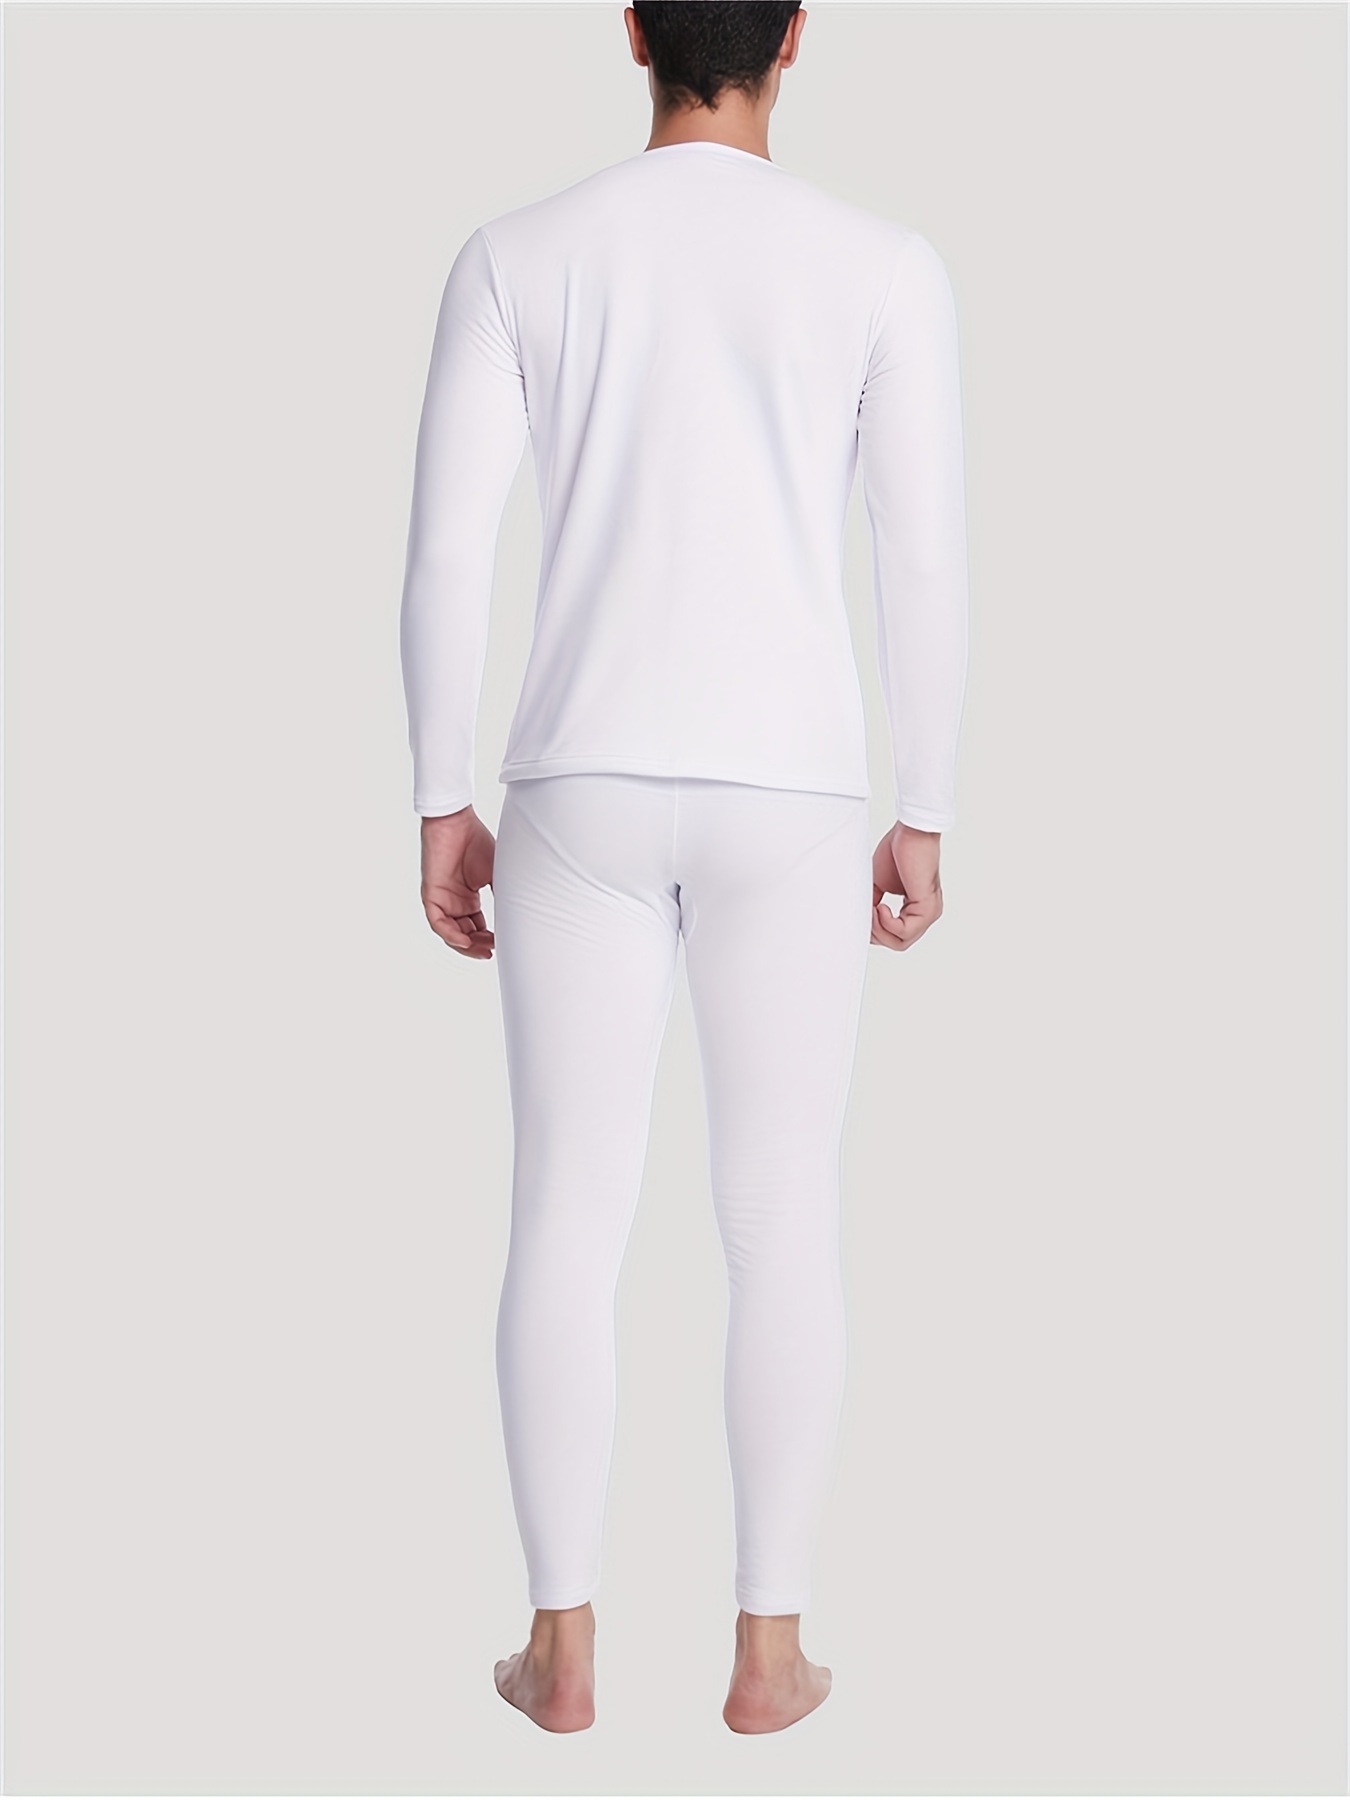 Men's Long John Thermal Underwear Set Base Layer Sets - Temu Canada